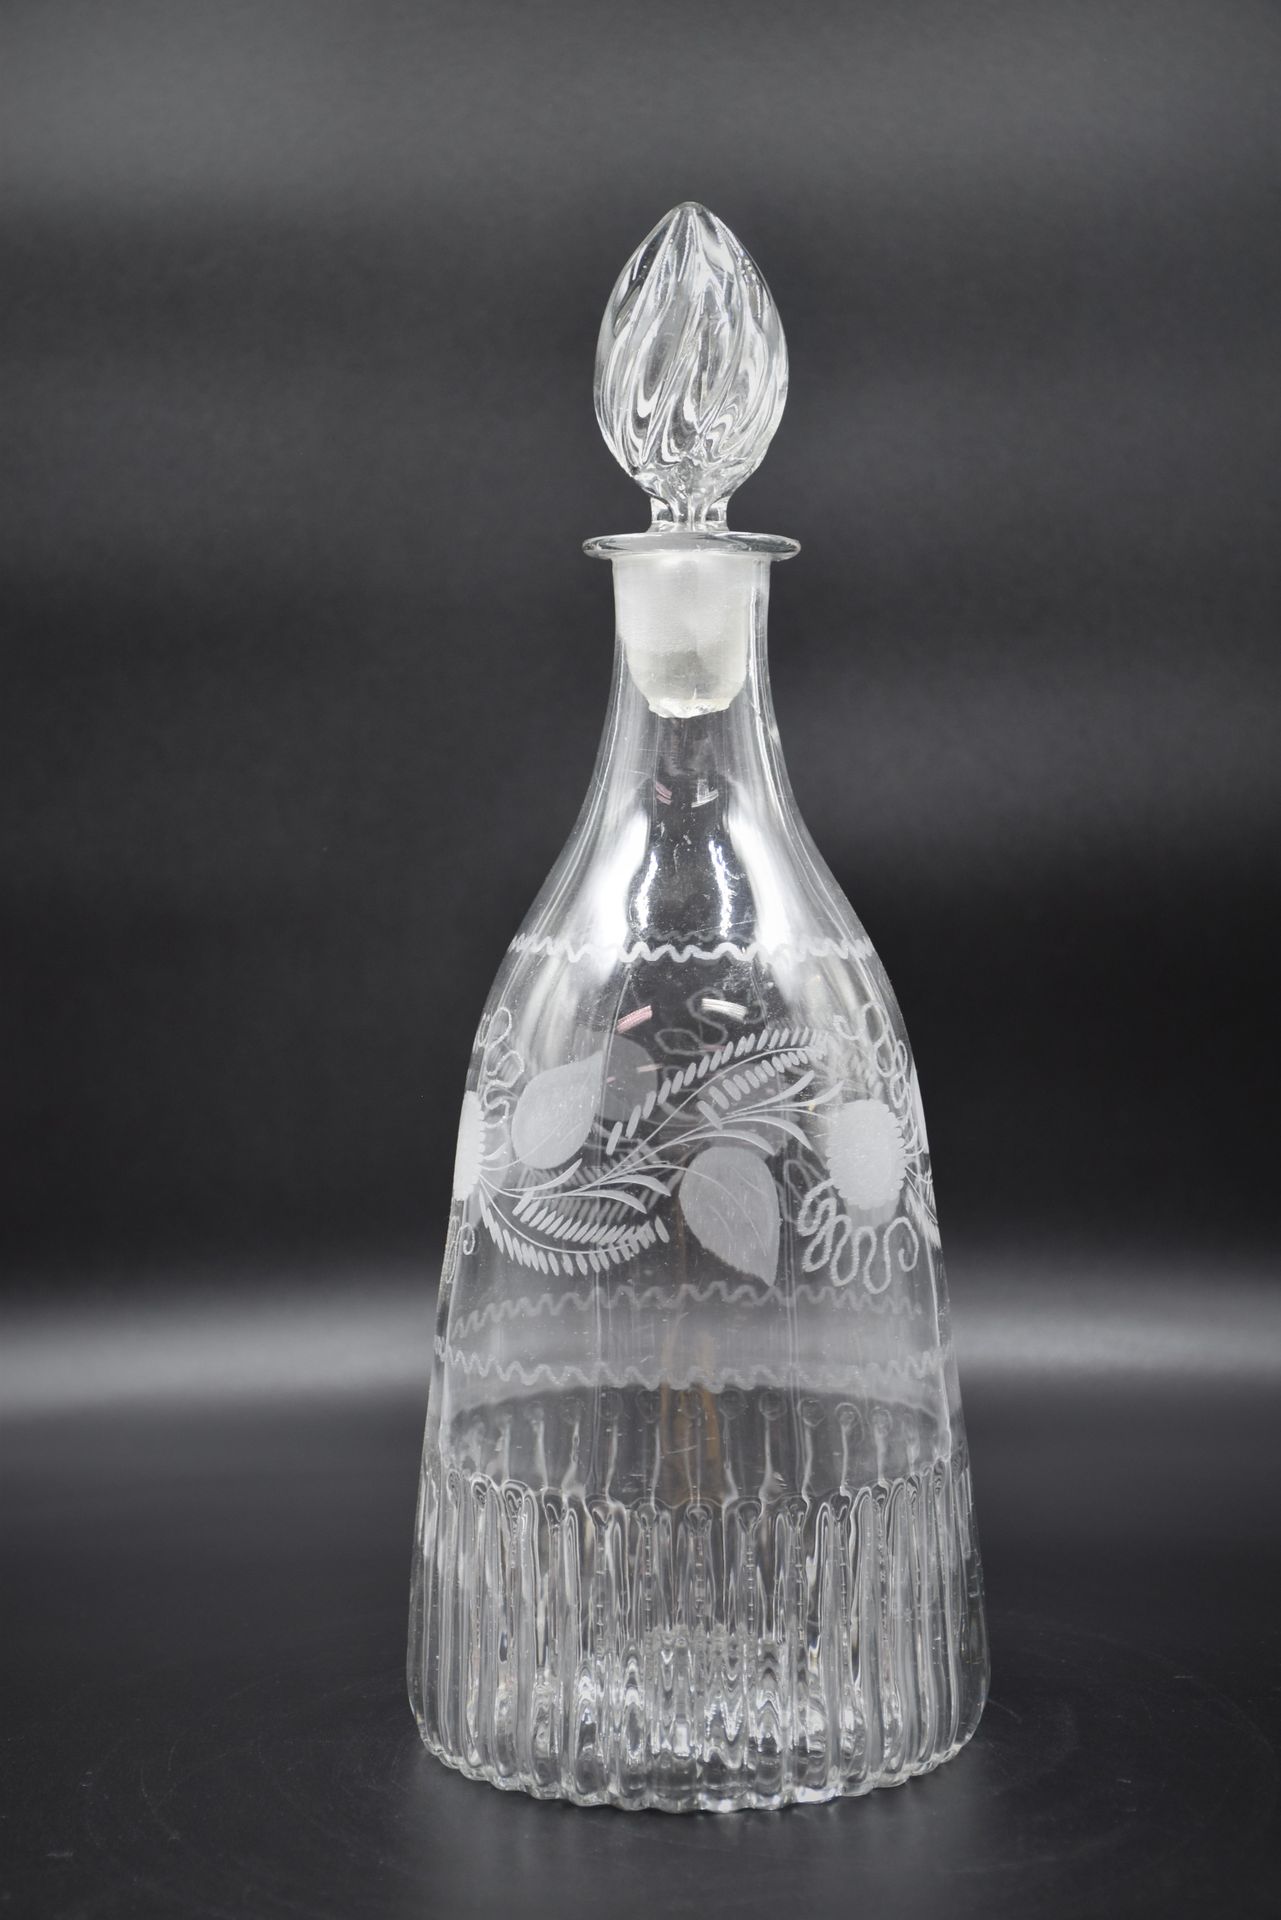 Null 兰斯玻璃杯。梨形。 19世纪初。高37厘米。